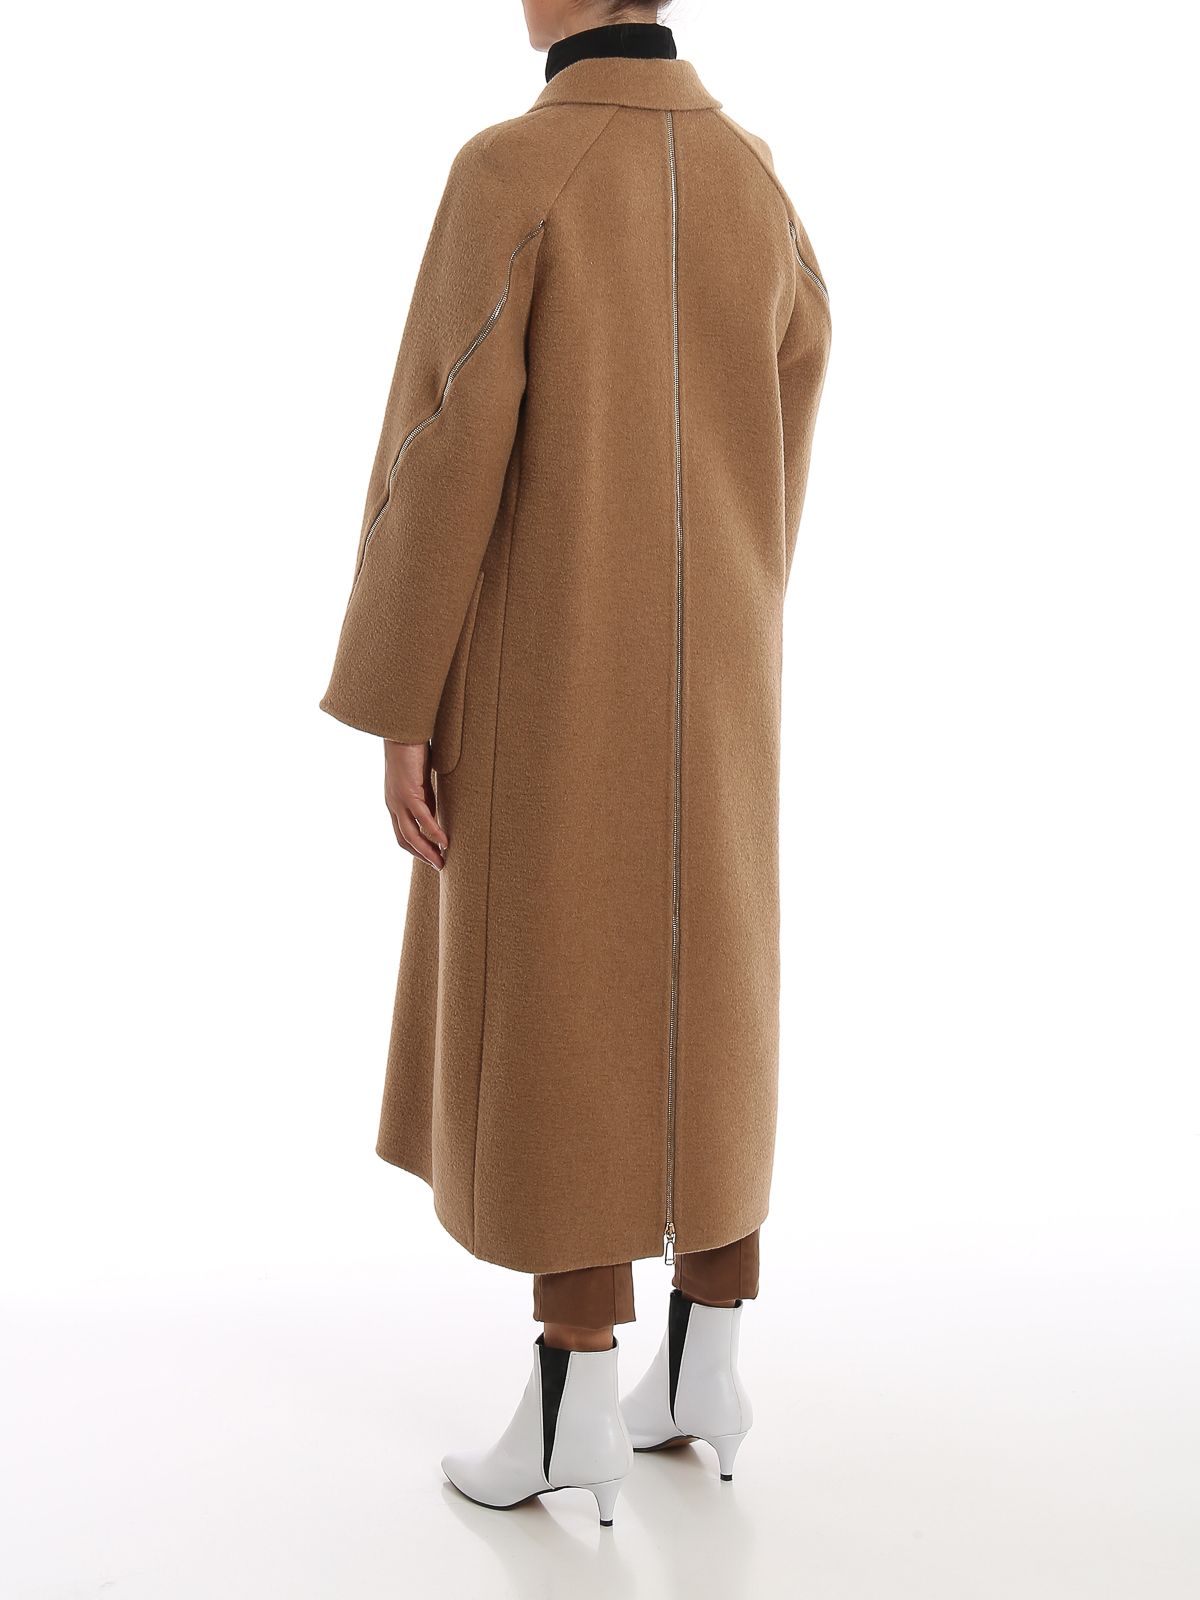 Fendi - Camel coat with zippers - بلند 